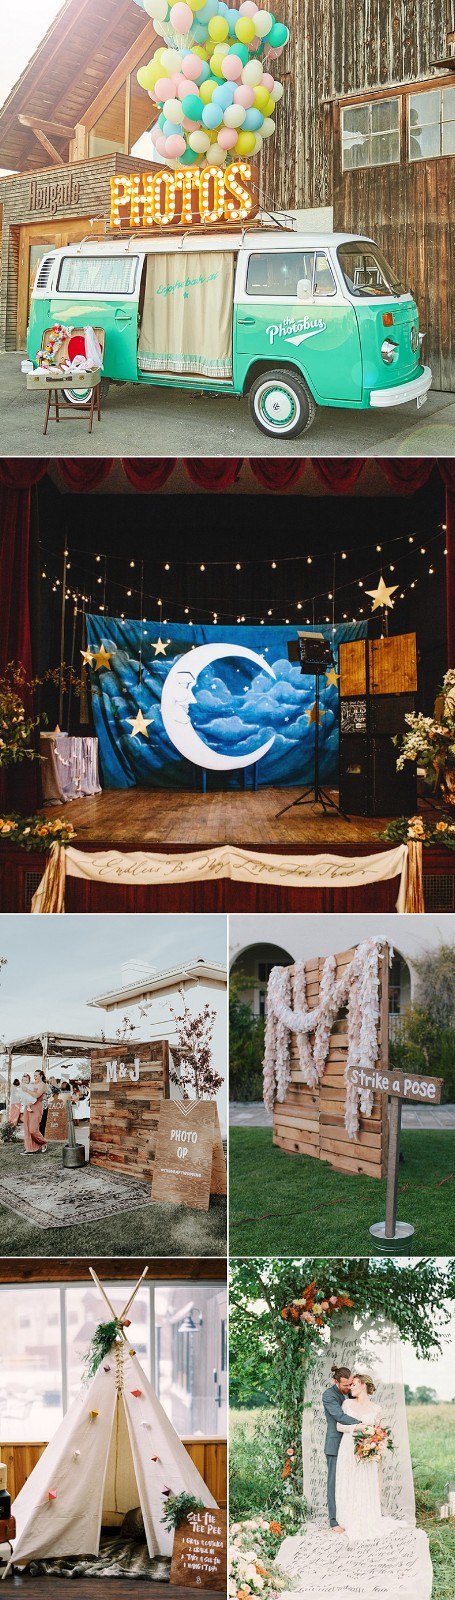 wedding-trend-2019-03-photobooth.jpg